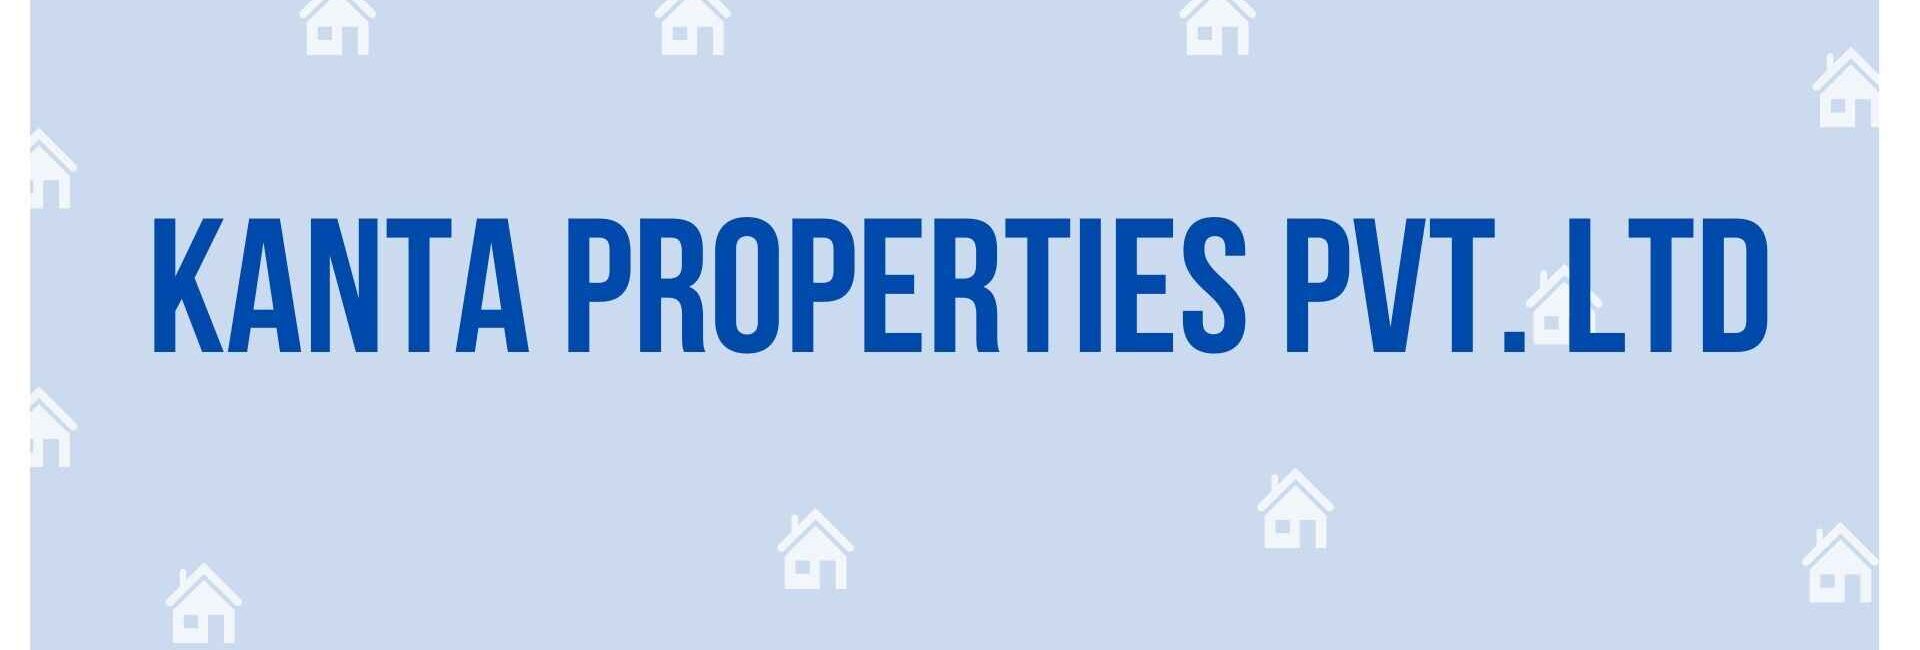 Kanta Properties Pvt. Ltd - Property Dealer in Noida